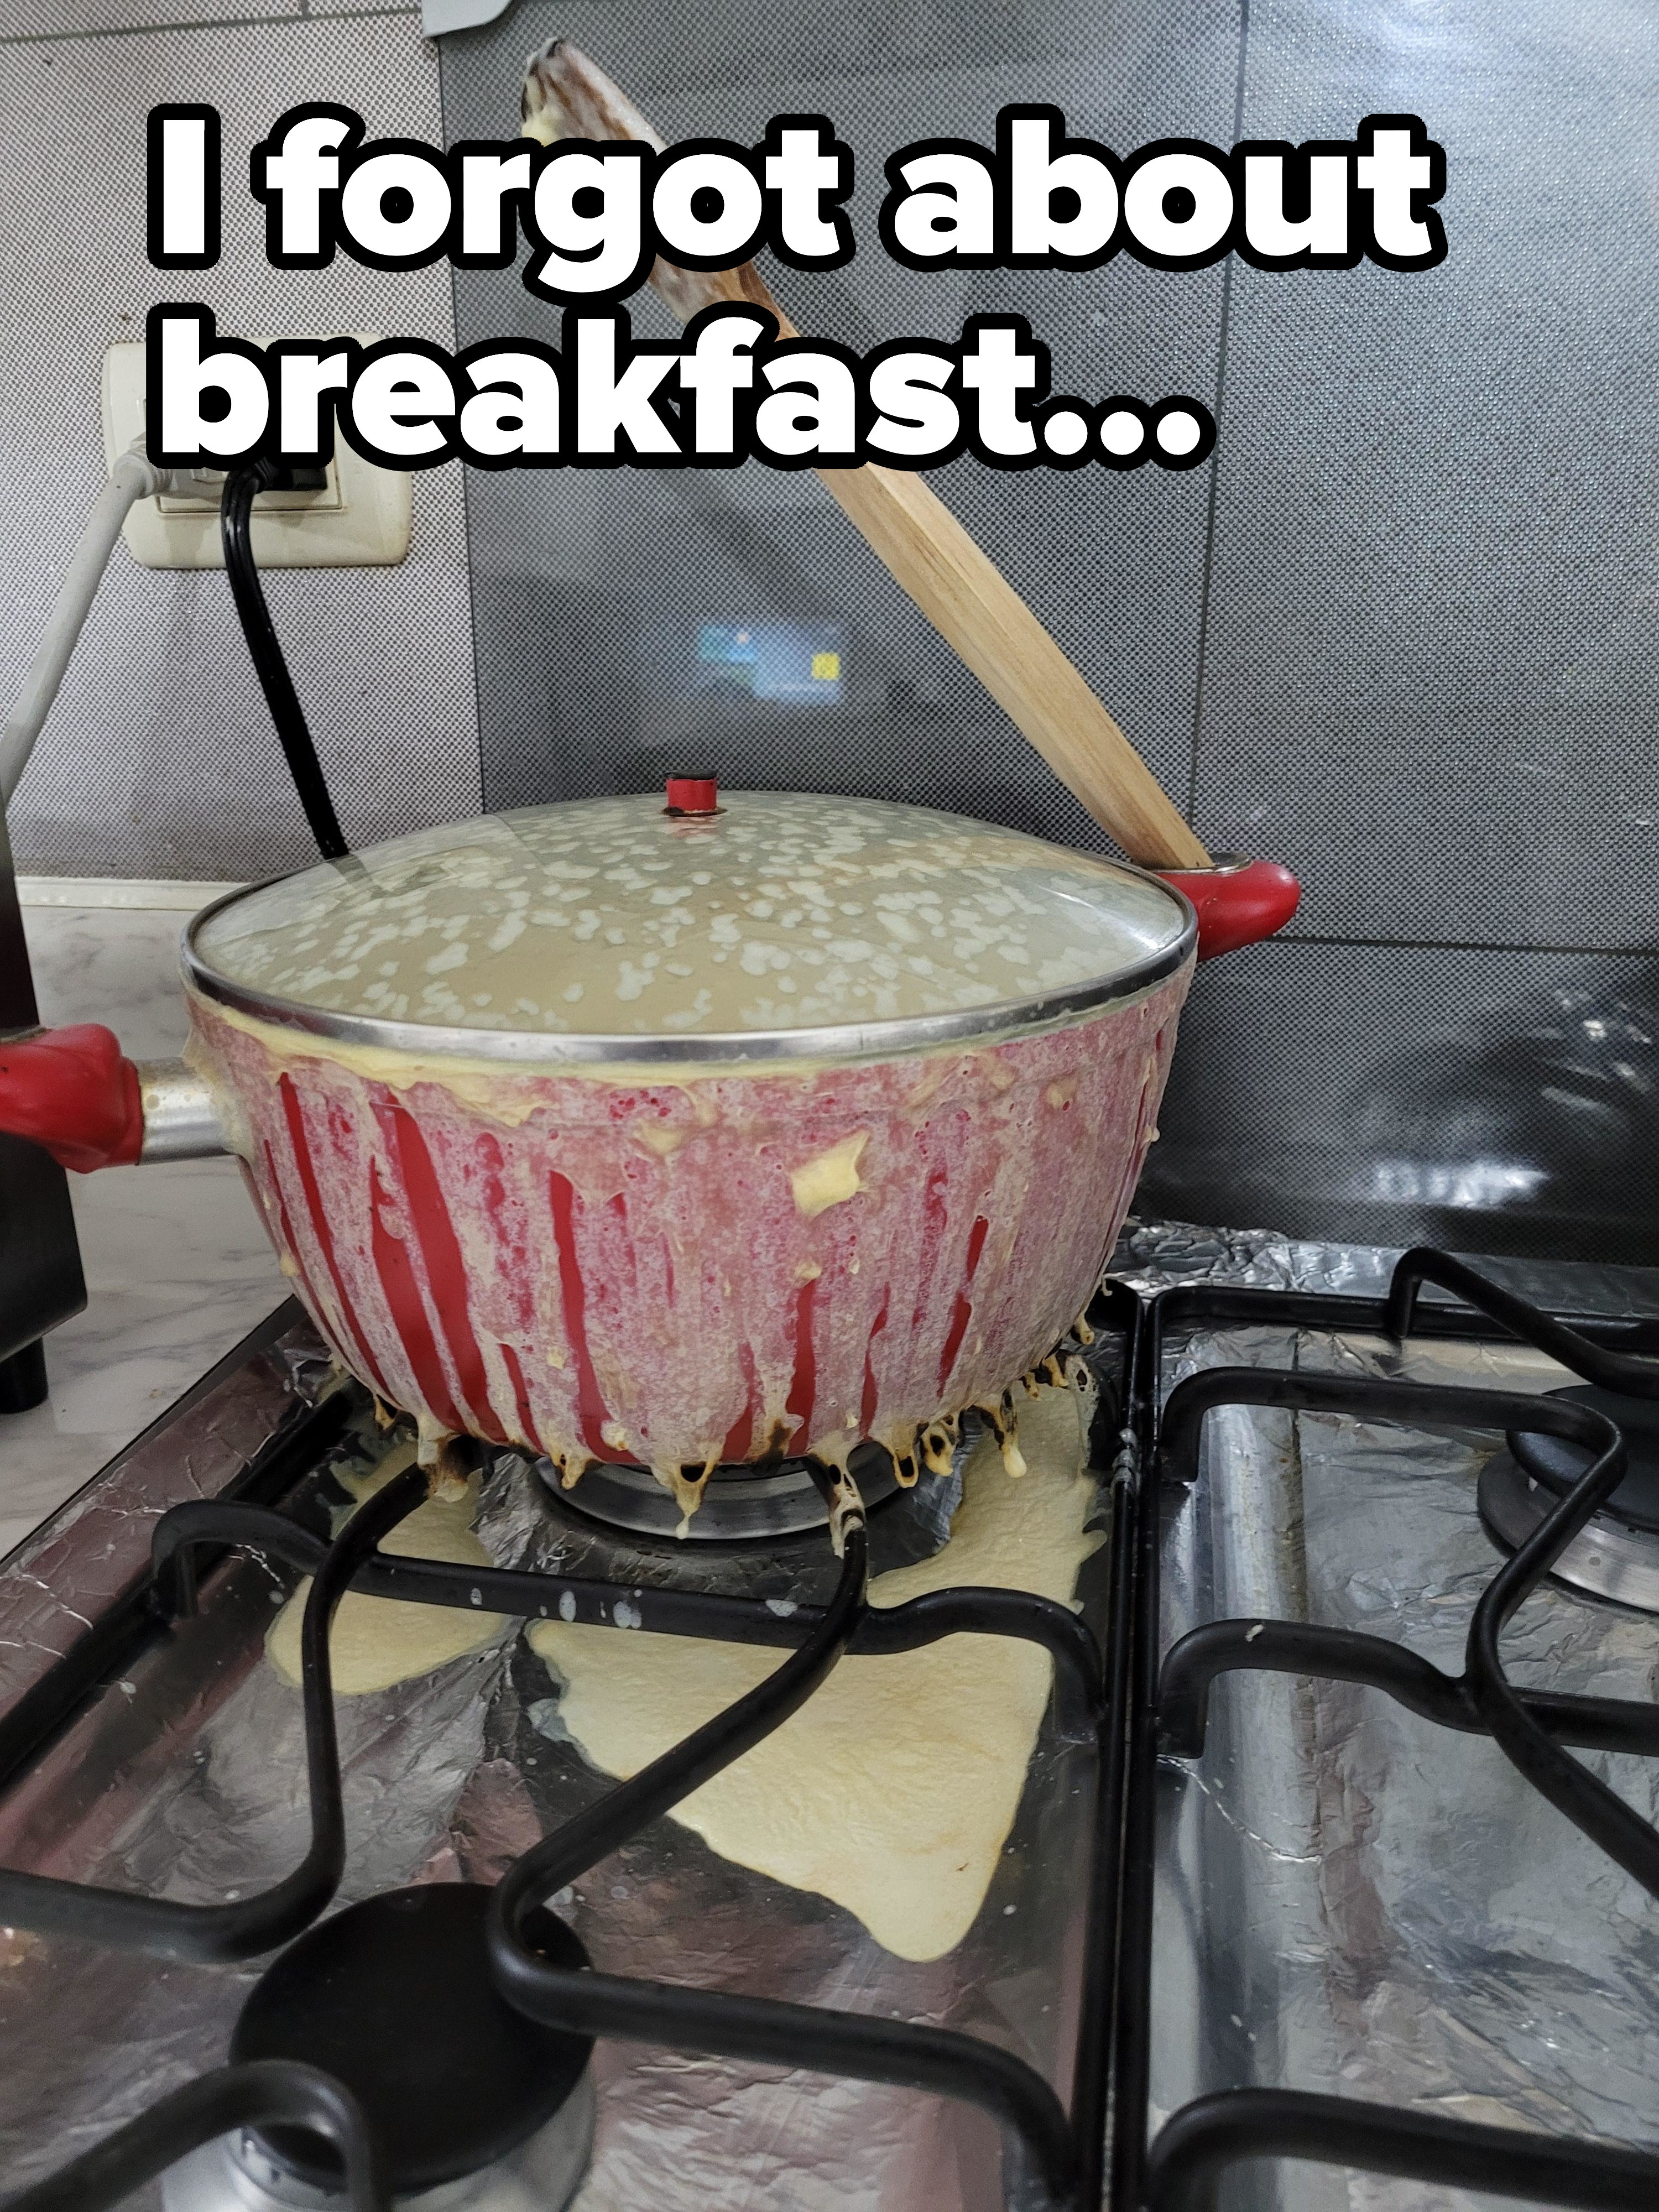 spilled breakfast meal